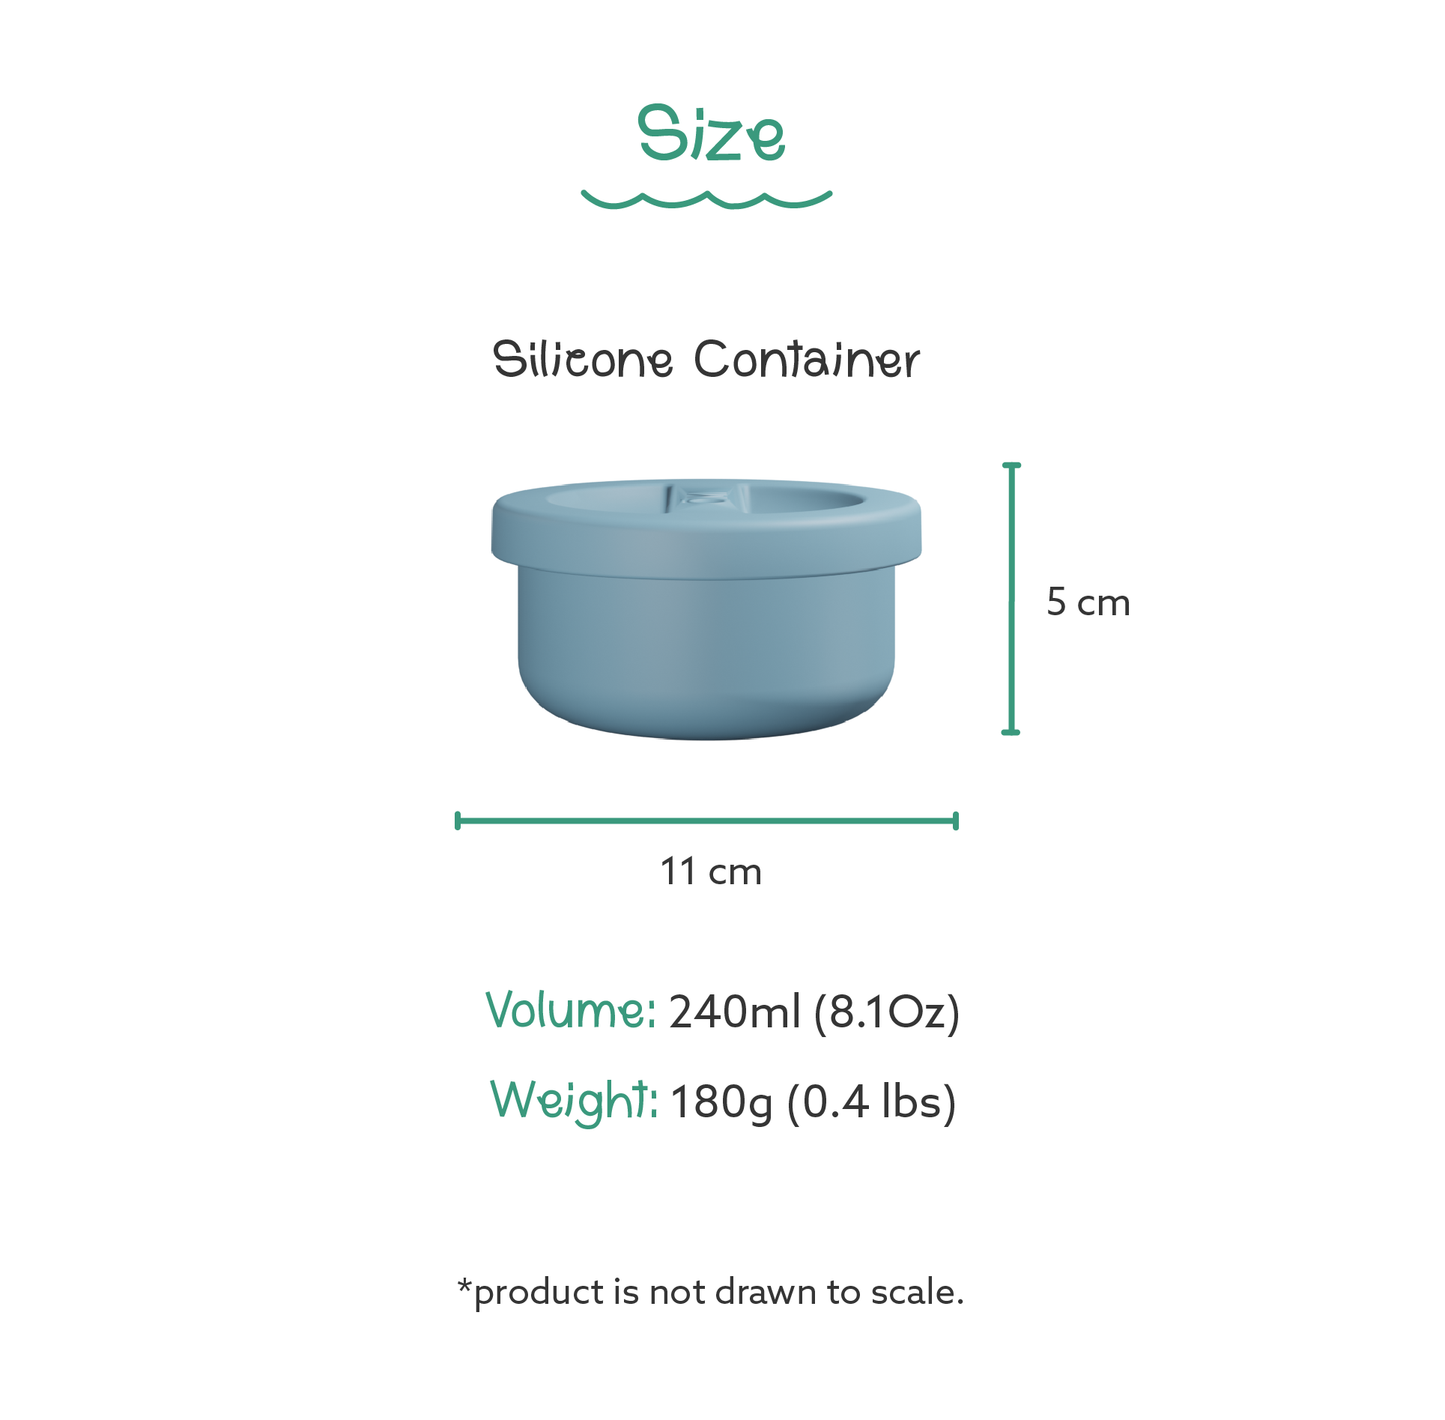 Silicone Container